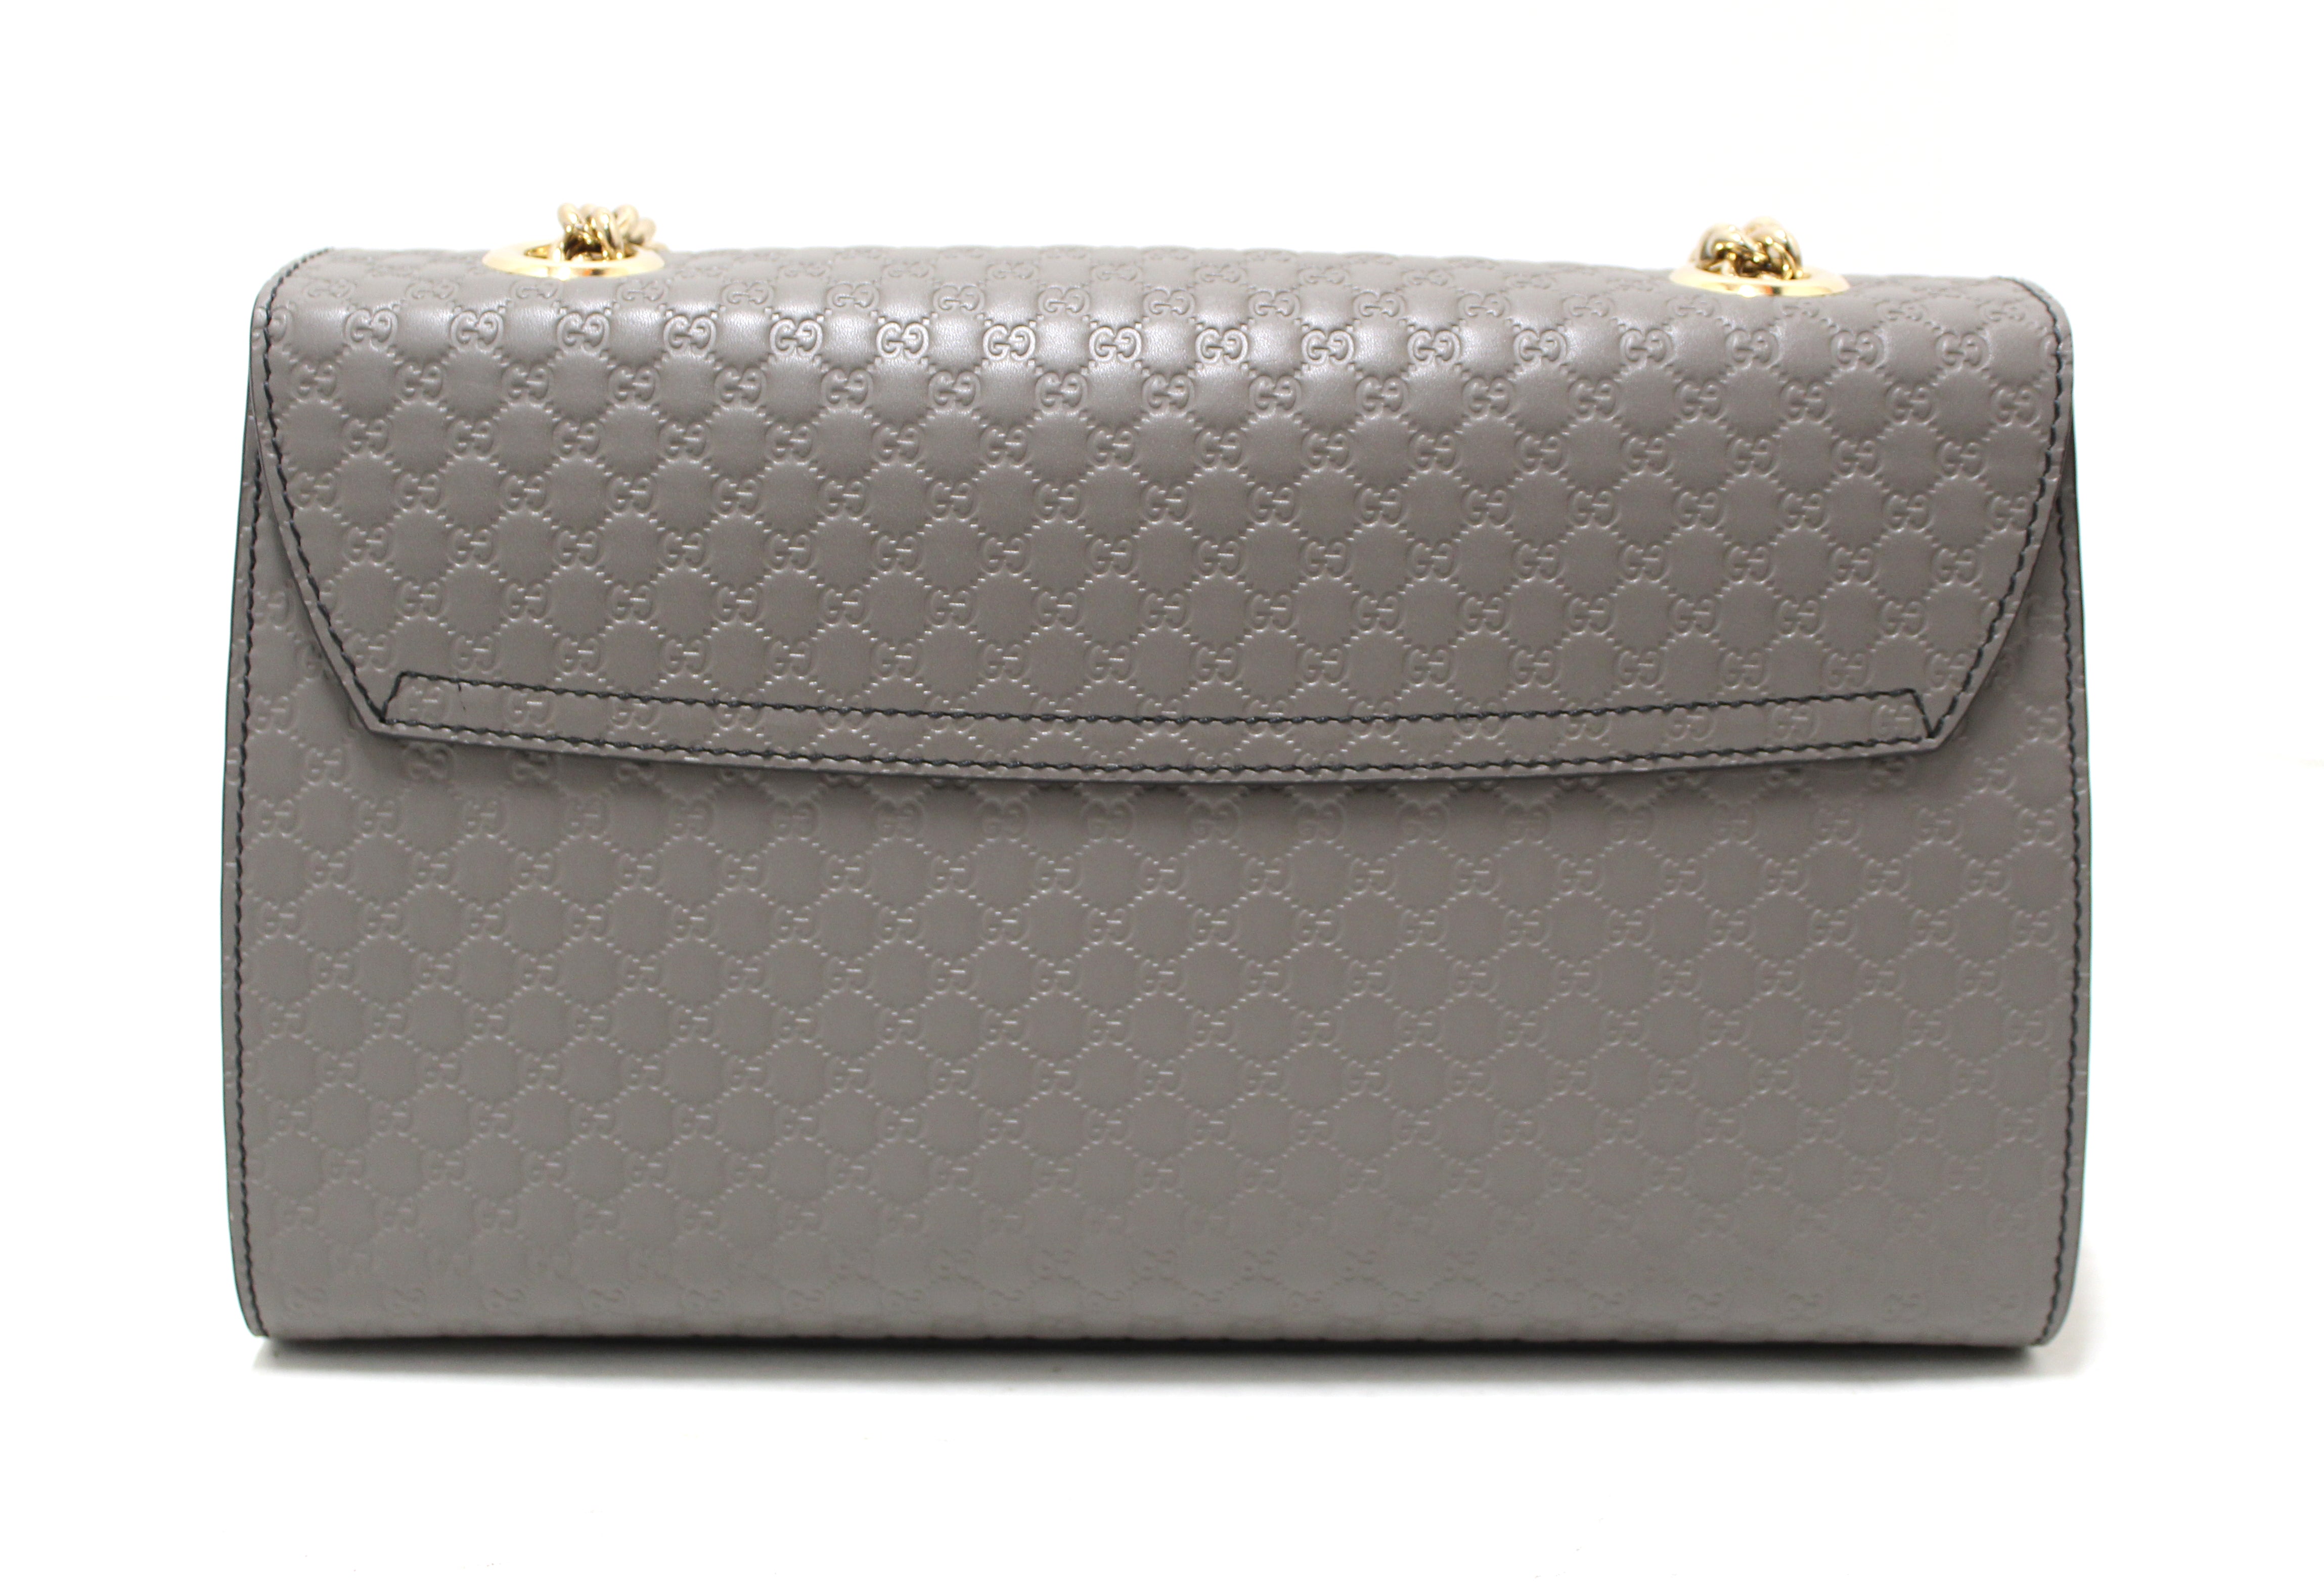 Authentic Gucci Grey Micro Guccissima Leather Medium Emily Shoulder Chain Bag 449635